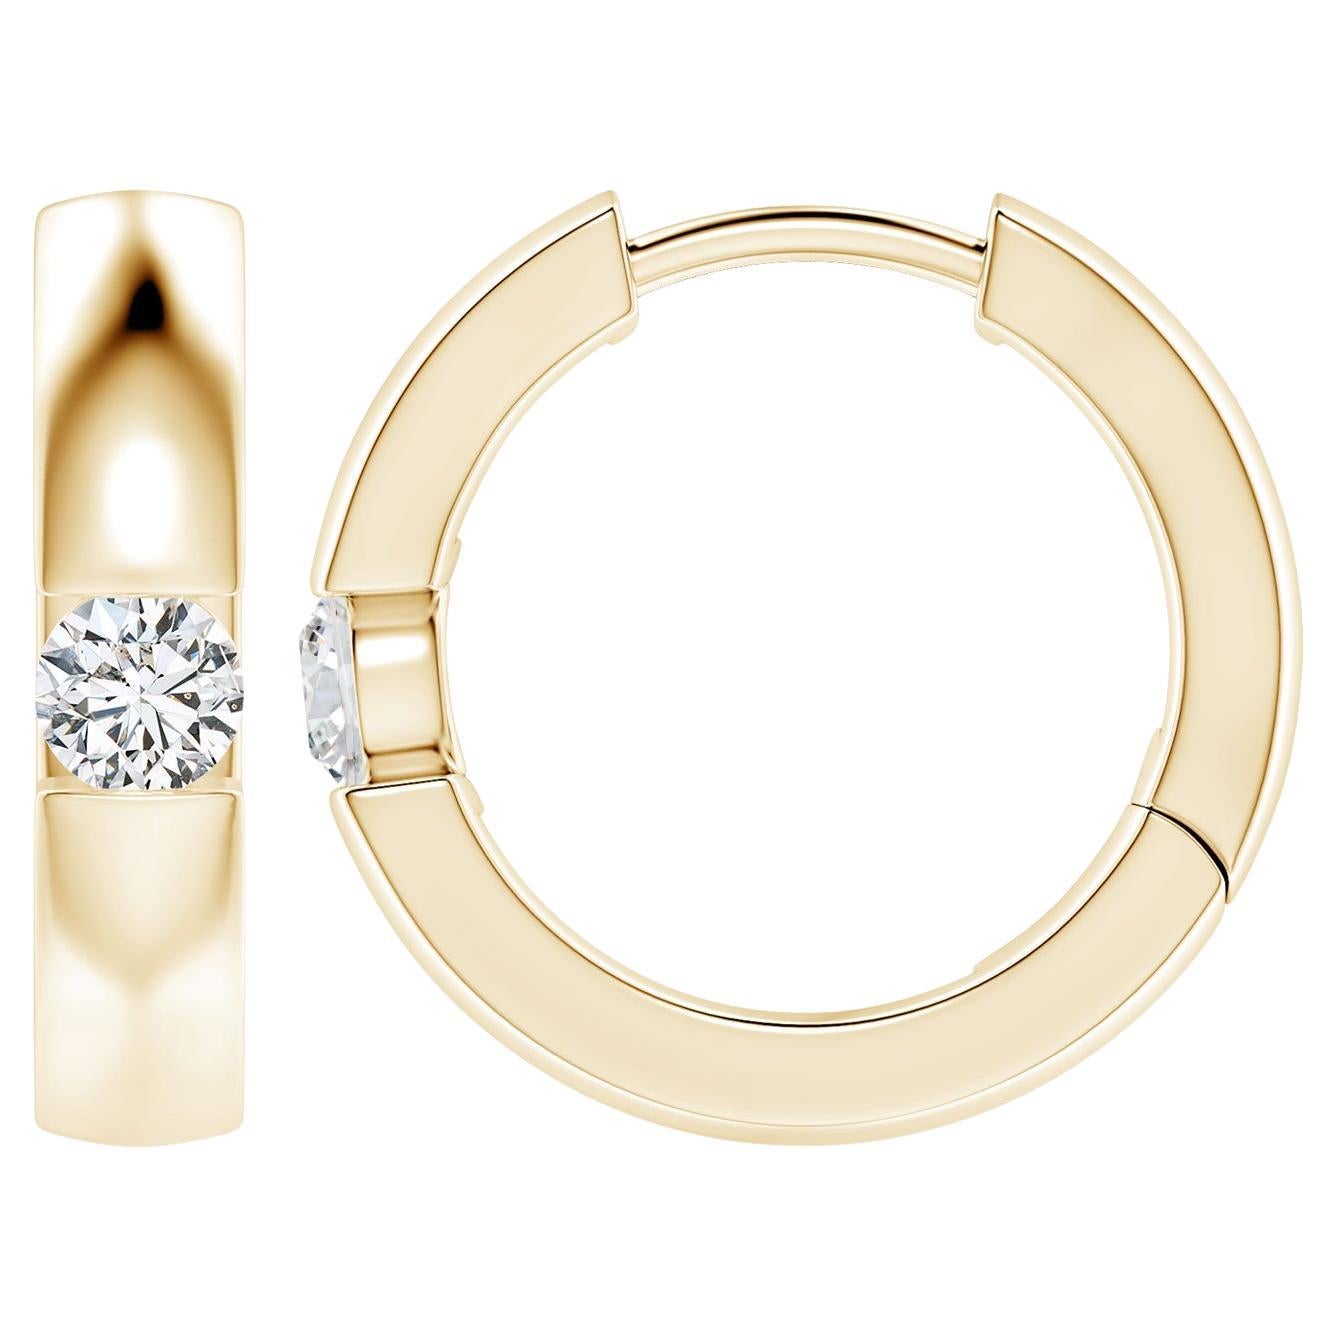 ANGARA, boucles d'oreilles en or jaune 14 carats avec diamants ronds naturels de 0,23 carat